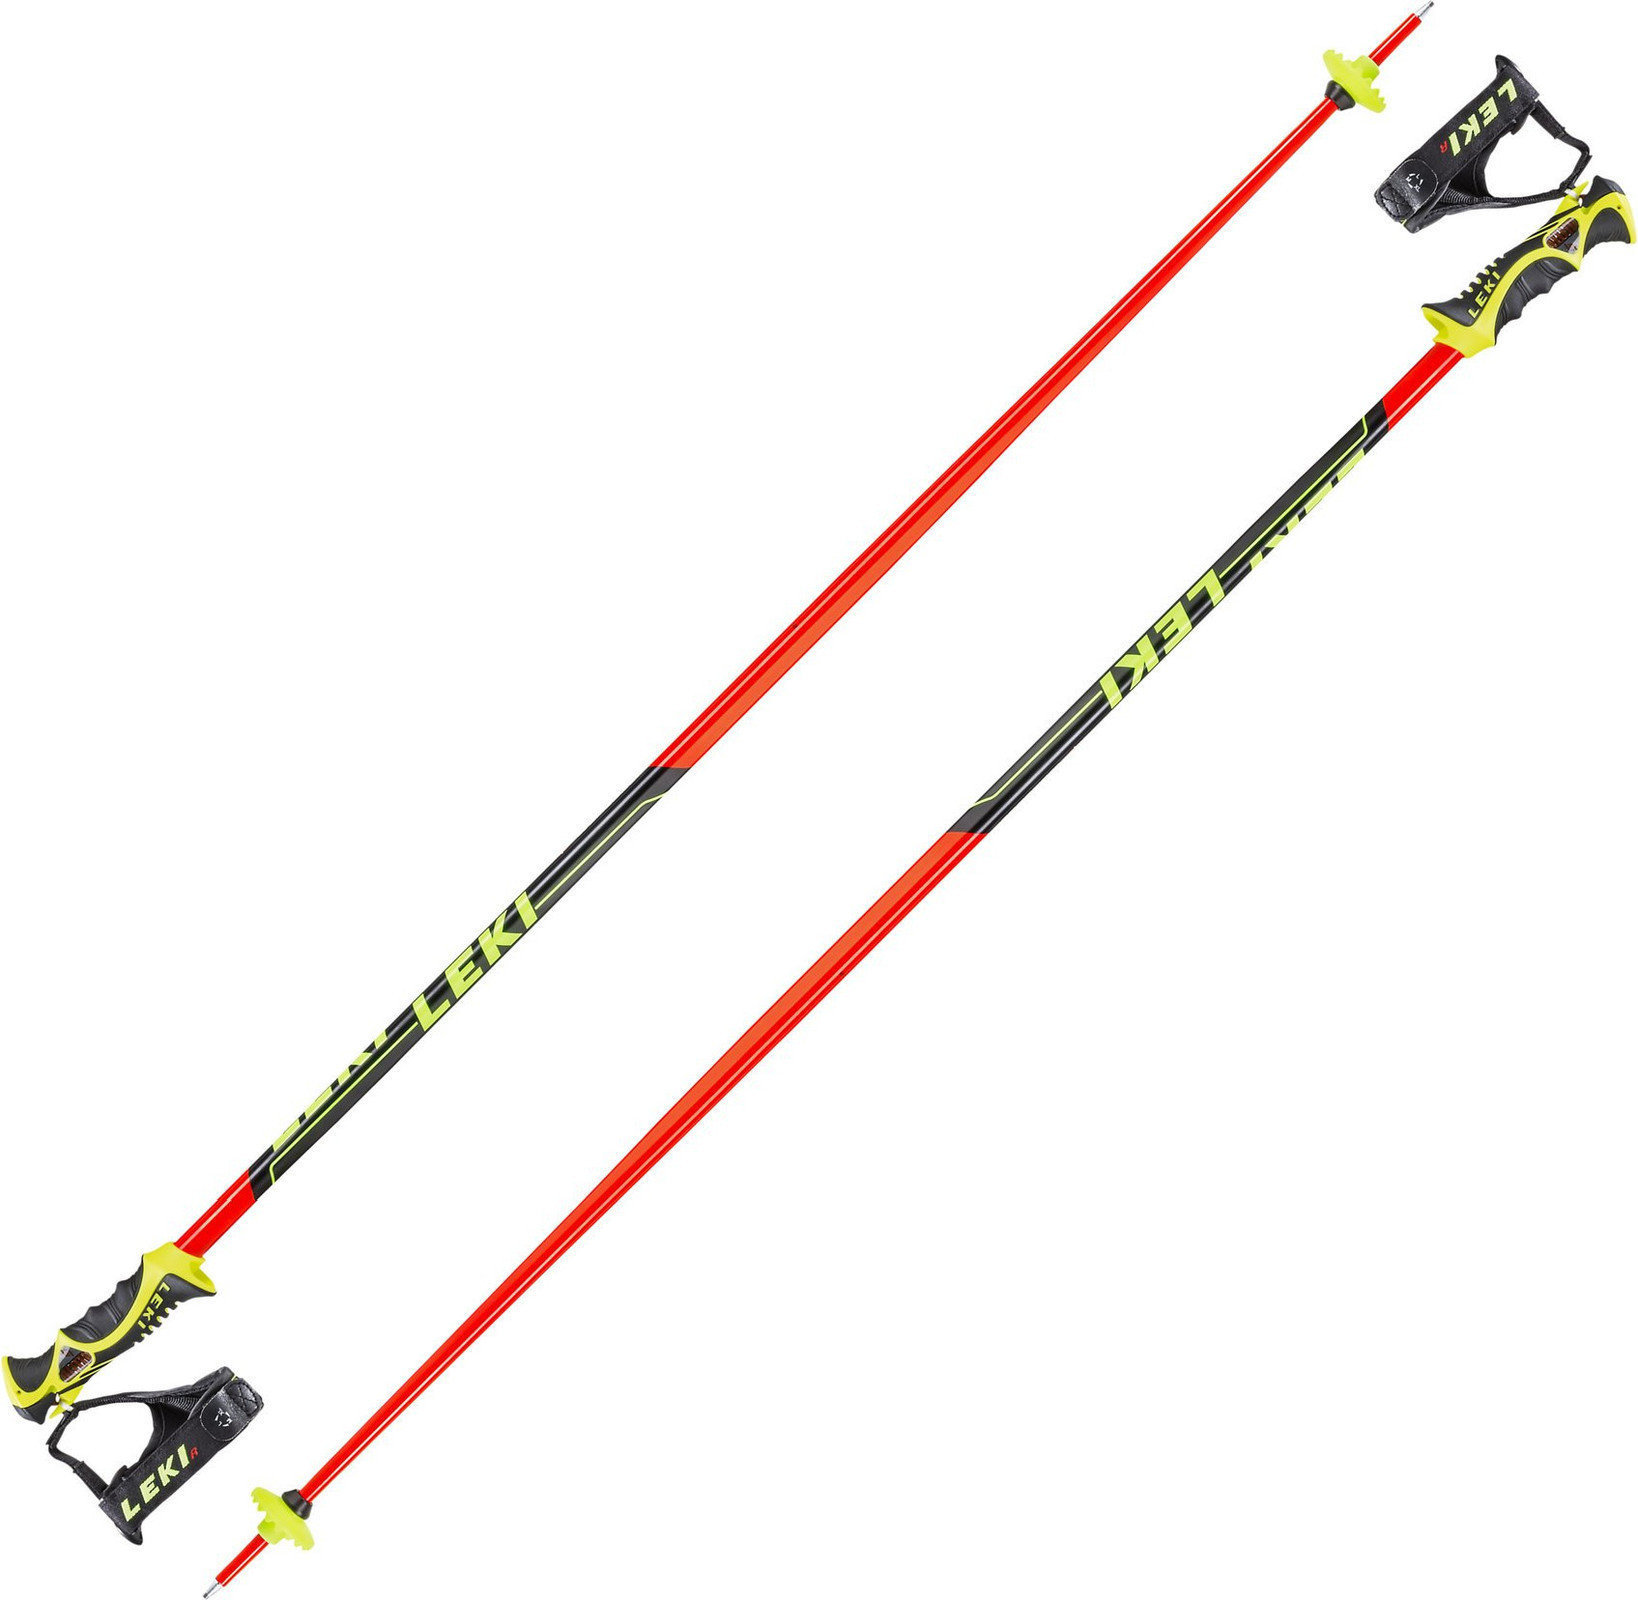 Ski-stokken Leki Worldcup Racing SL Neonred/Black/White/Yellow 135 cm Ski-stokken